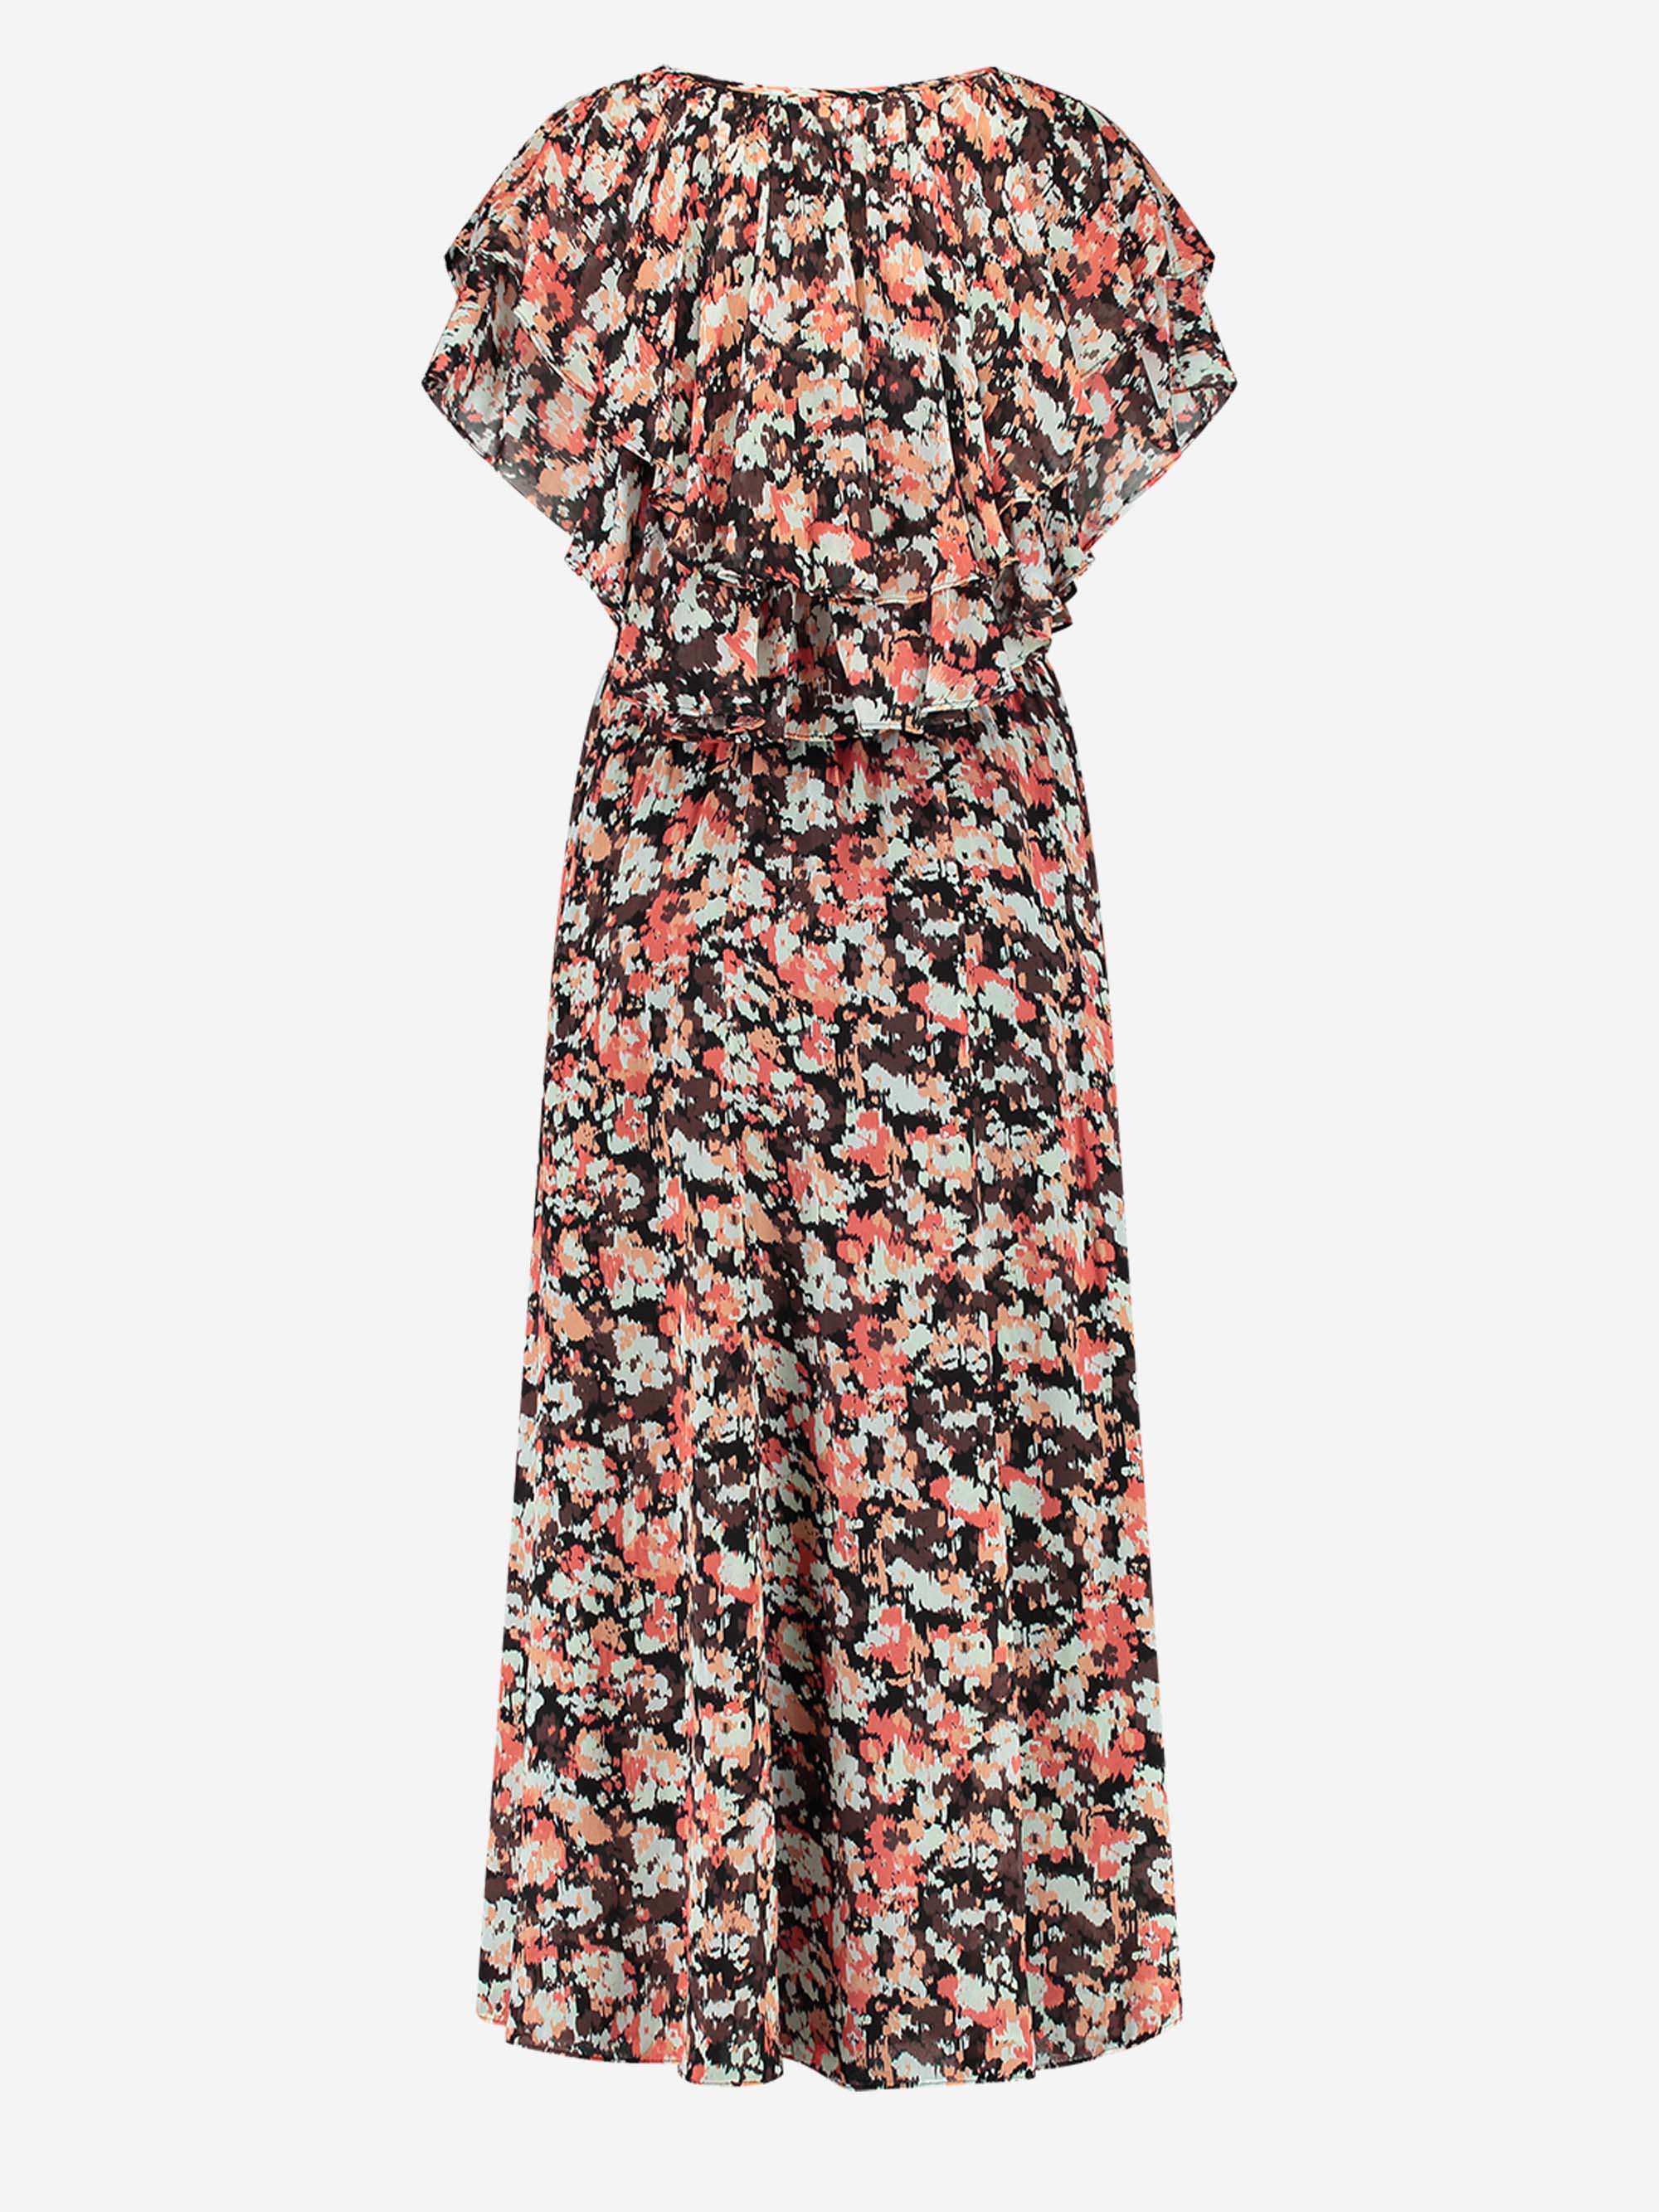 Flower print maxi dress with elastic waistband